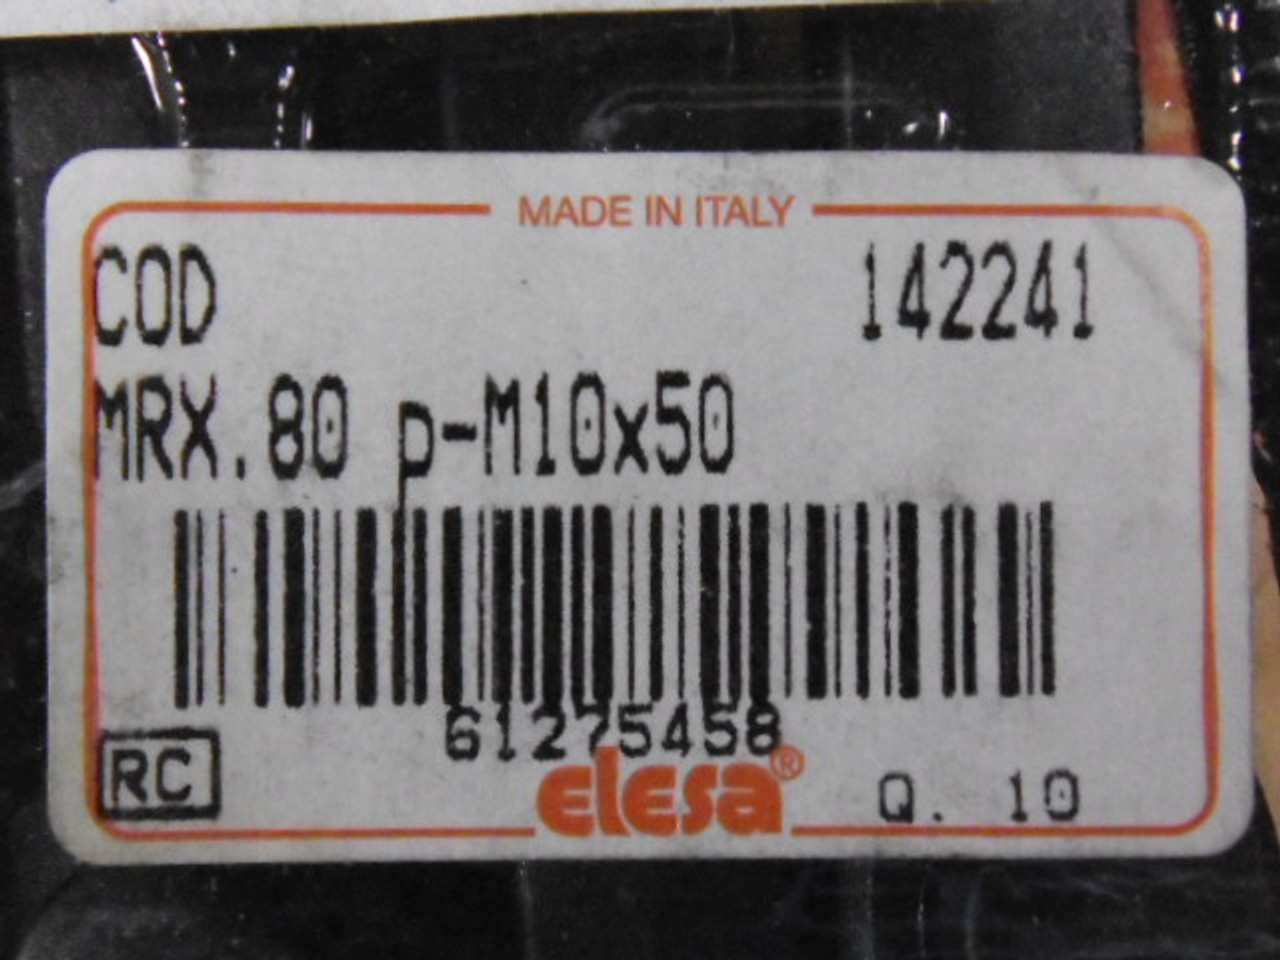 Elesa MRX.80 P-M10X50 Adjustable Handle Clamping Lever 1 Pack of 10 Pcs ! NEW !